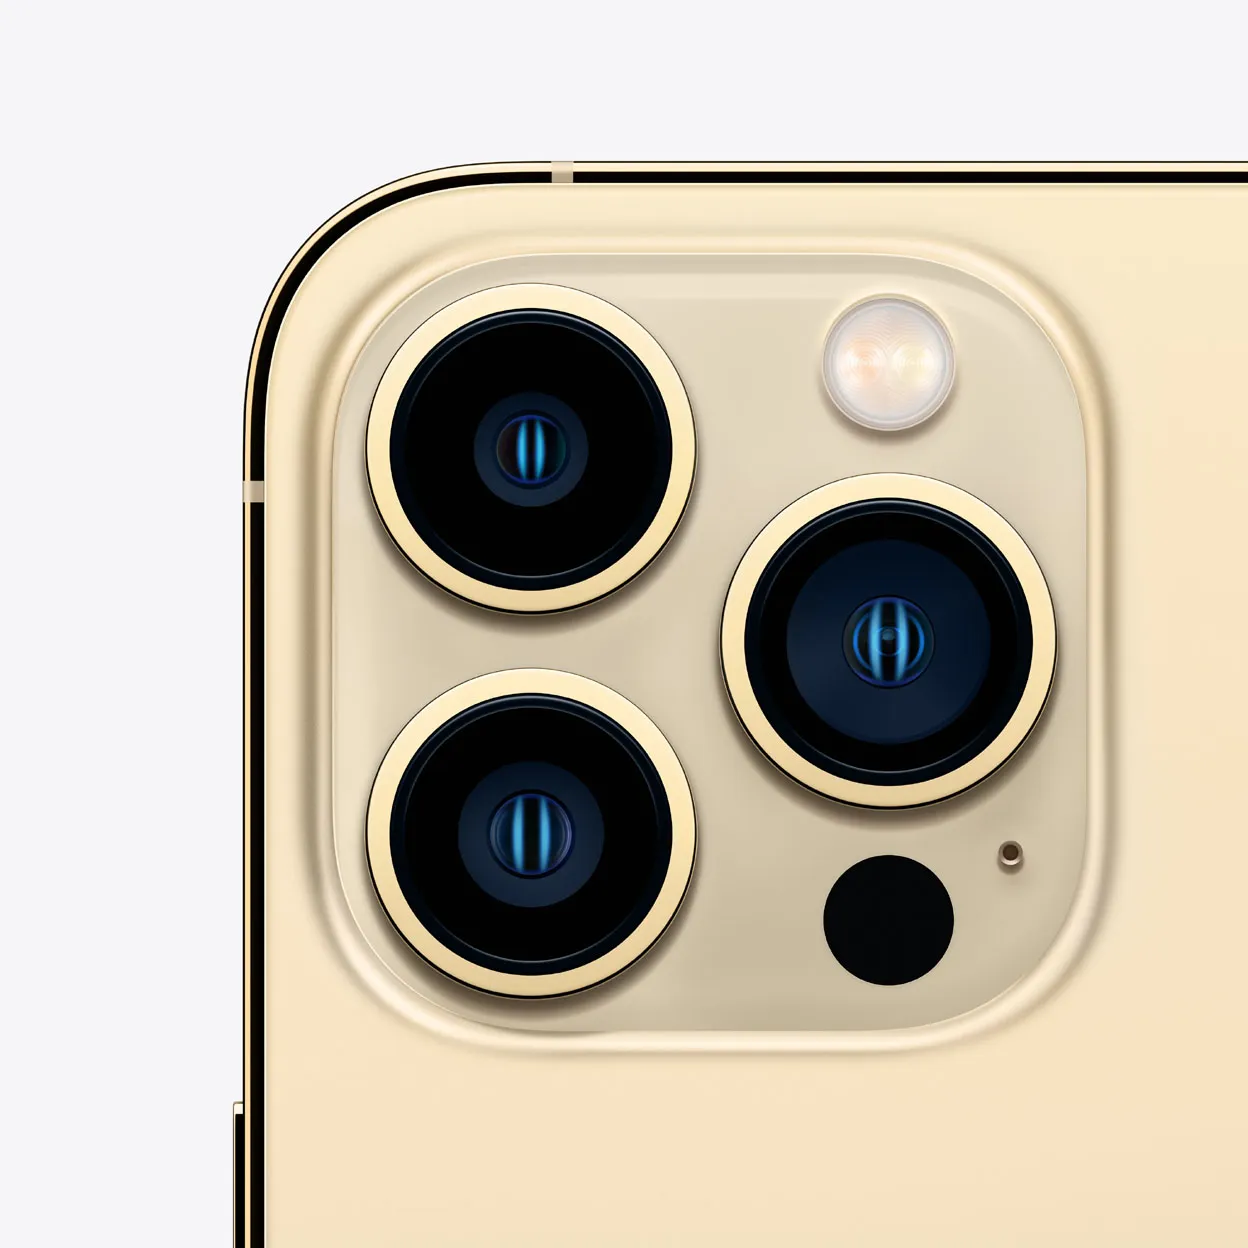 Apple iPhone 13 Pro (256GB) – Gold